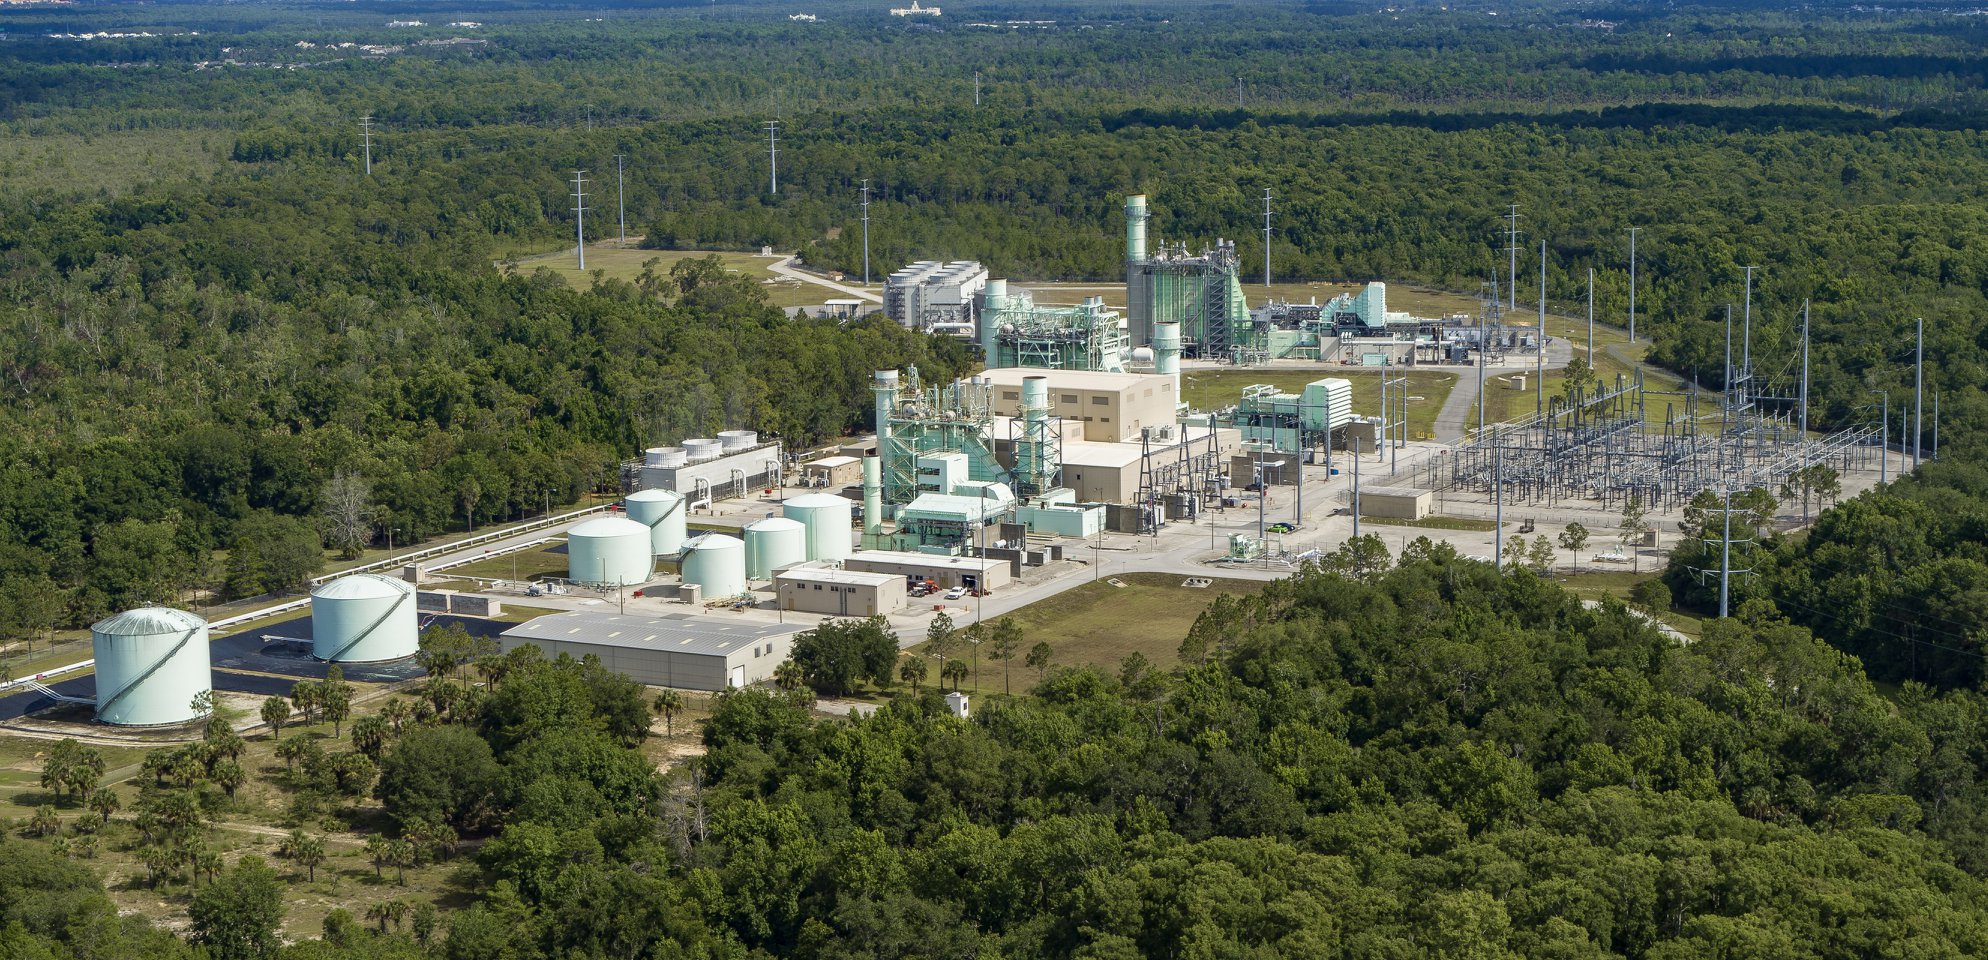 Cane Island Power Park Named Top Power Plant